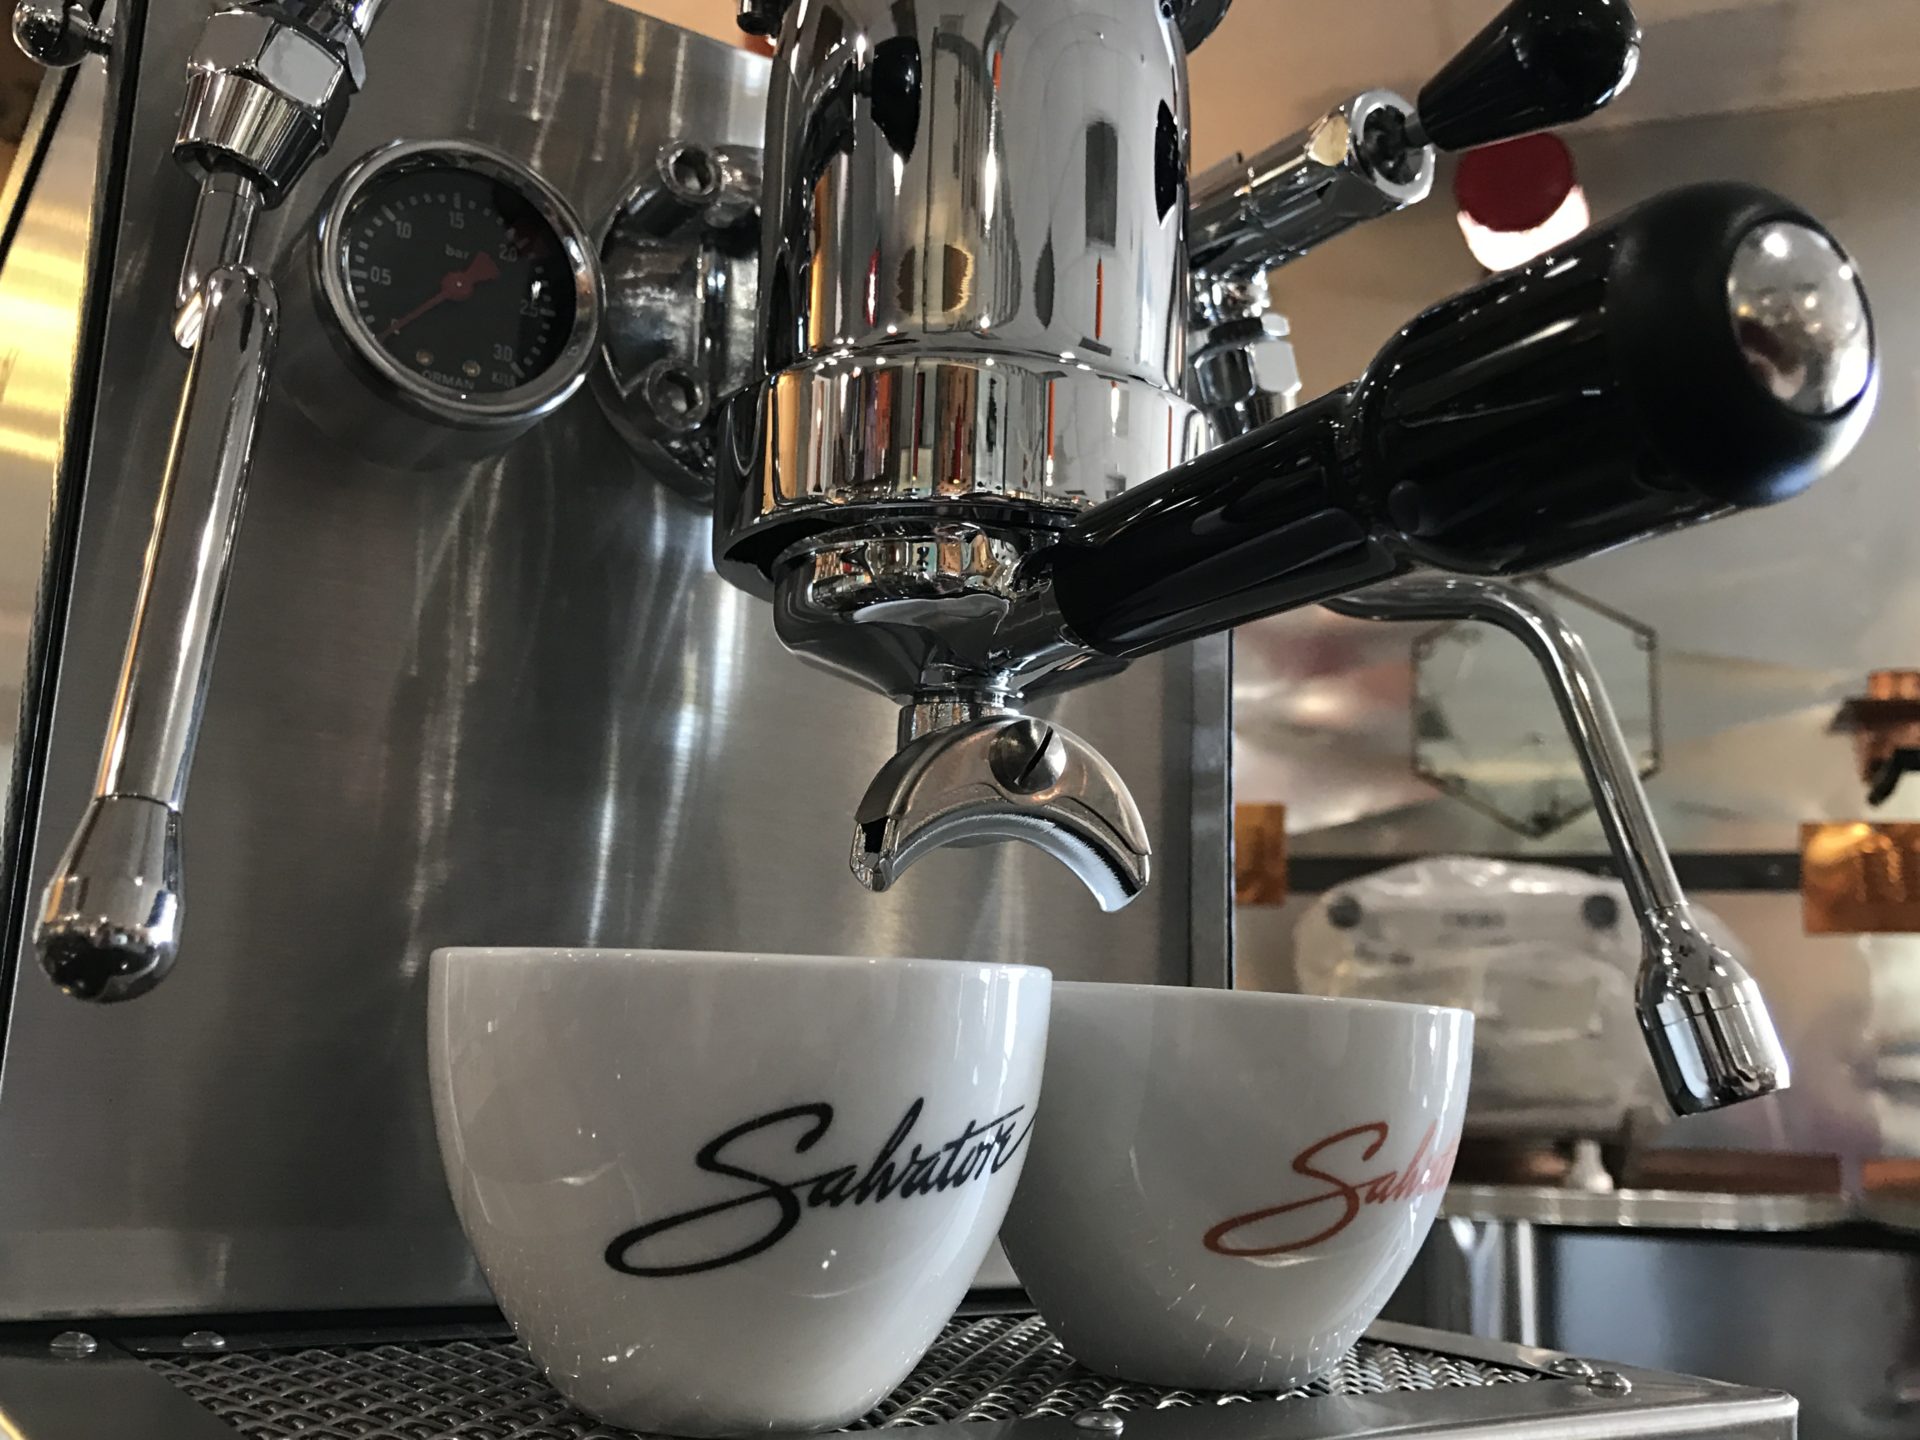 https://espressosuperstore.com/wp-content/uploads/2018/06/SL-w-cups.jpg